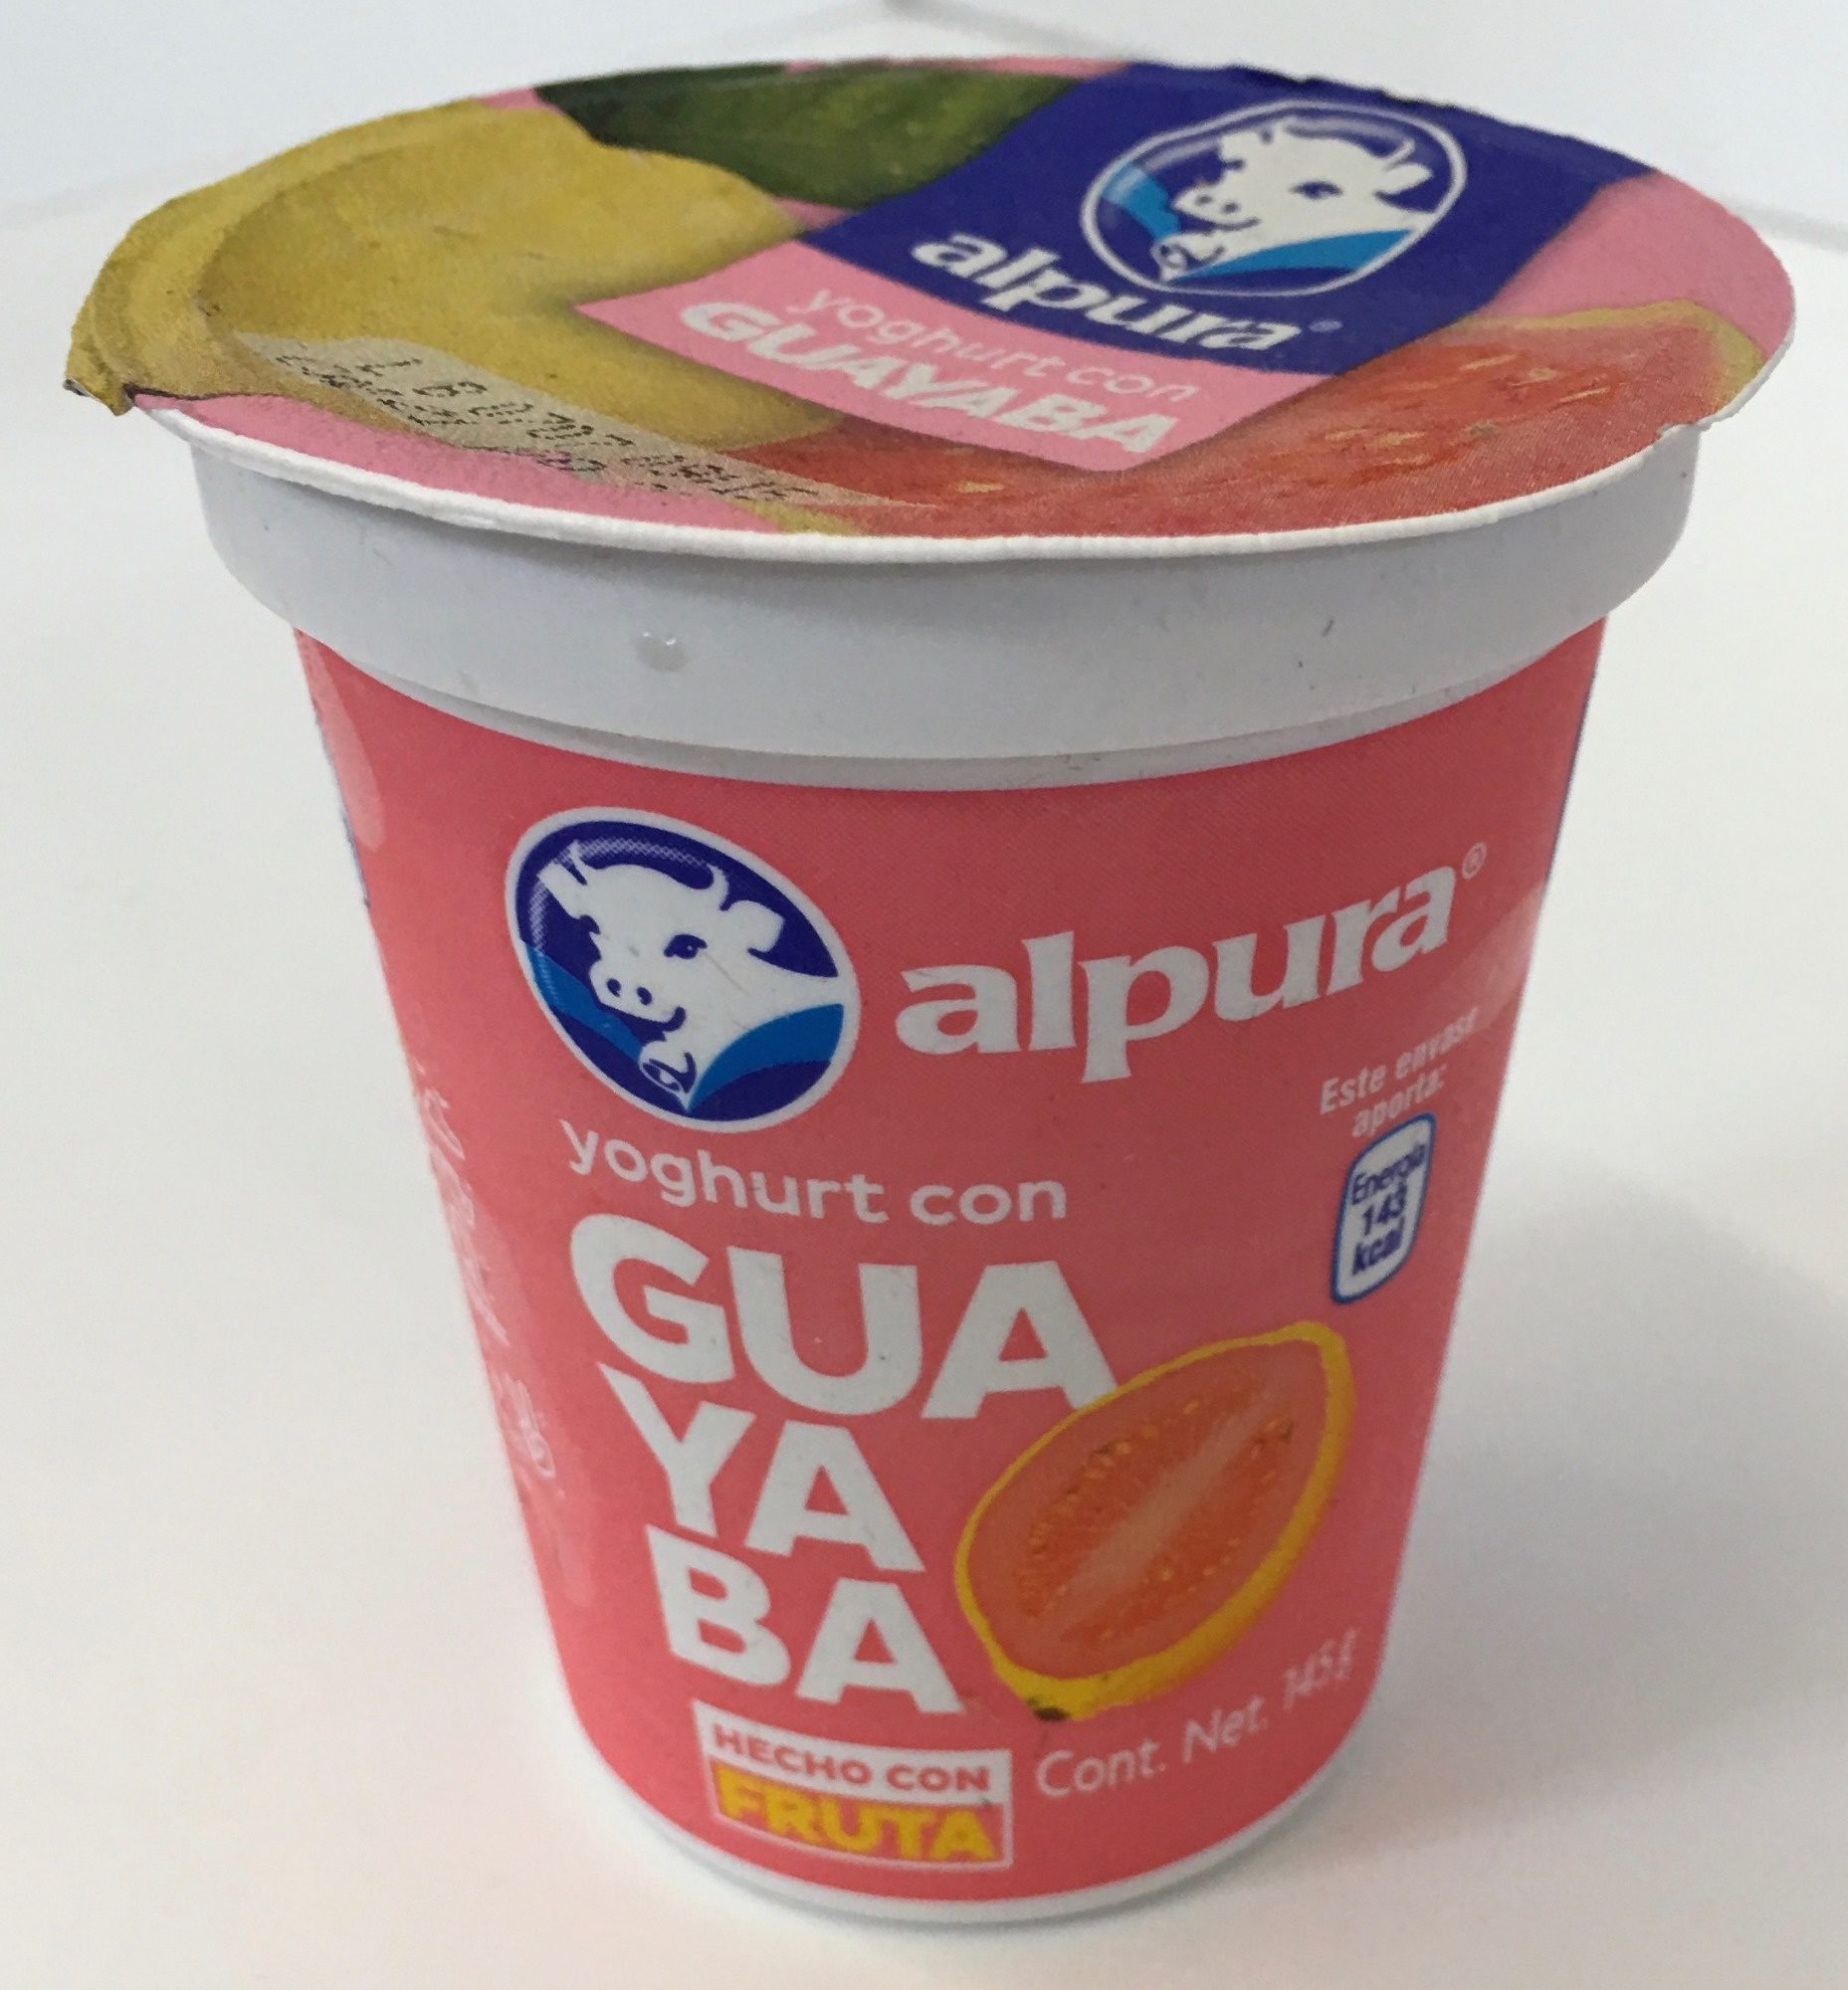 Alpura Yoghurt con Guayaba - Produkt - es